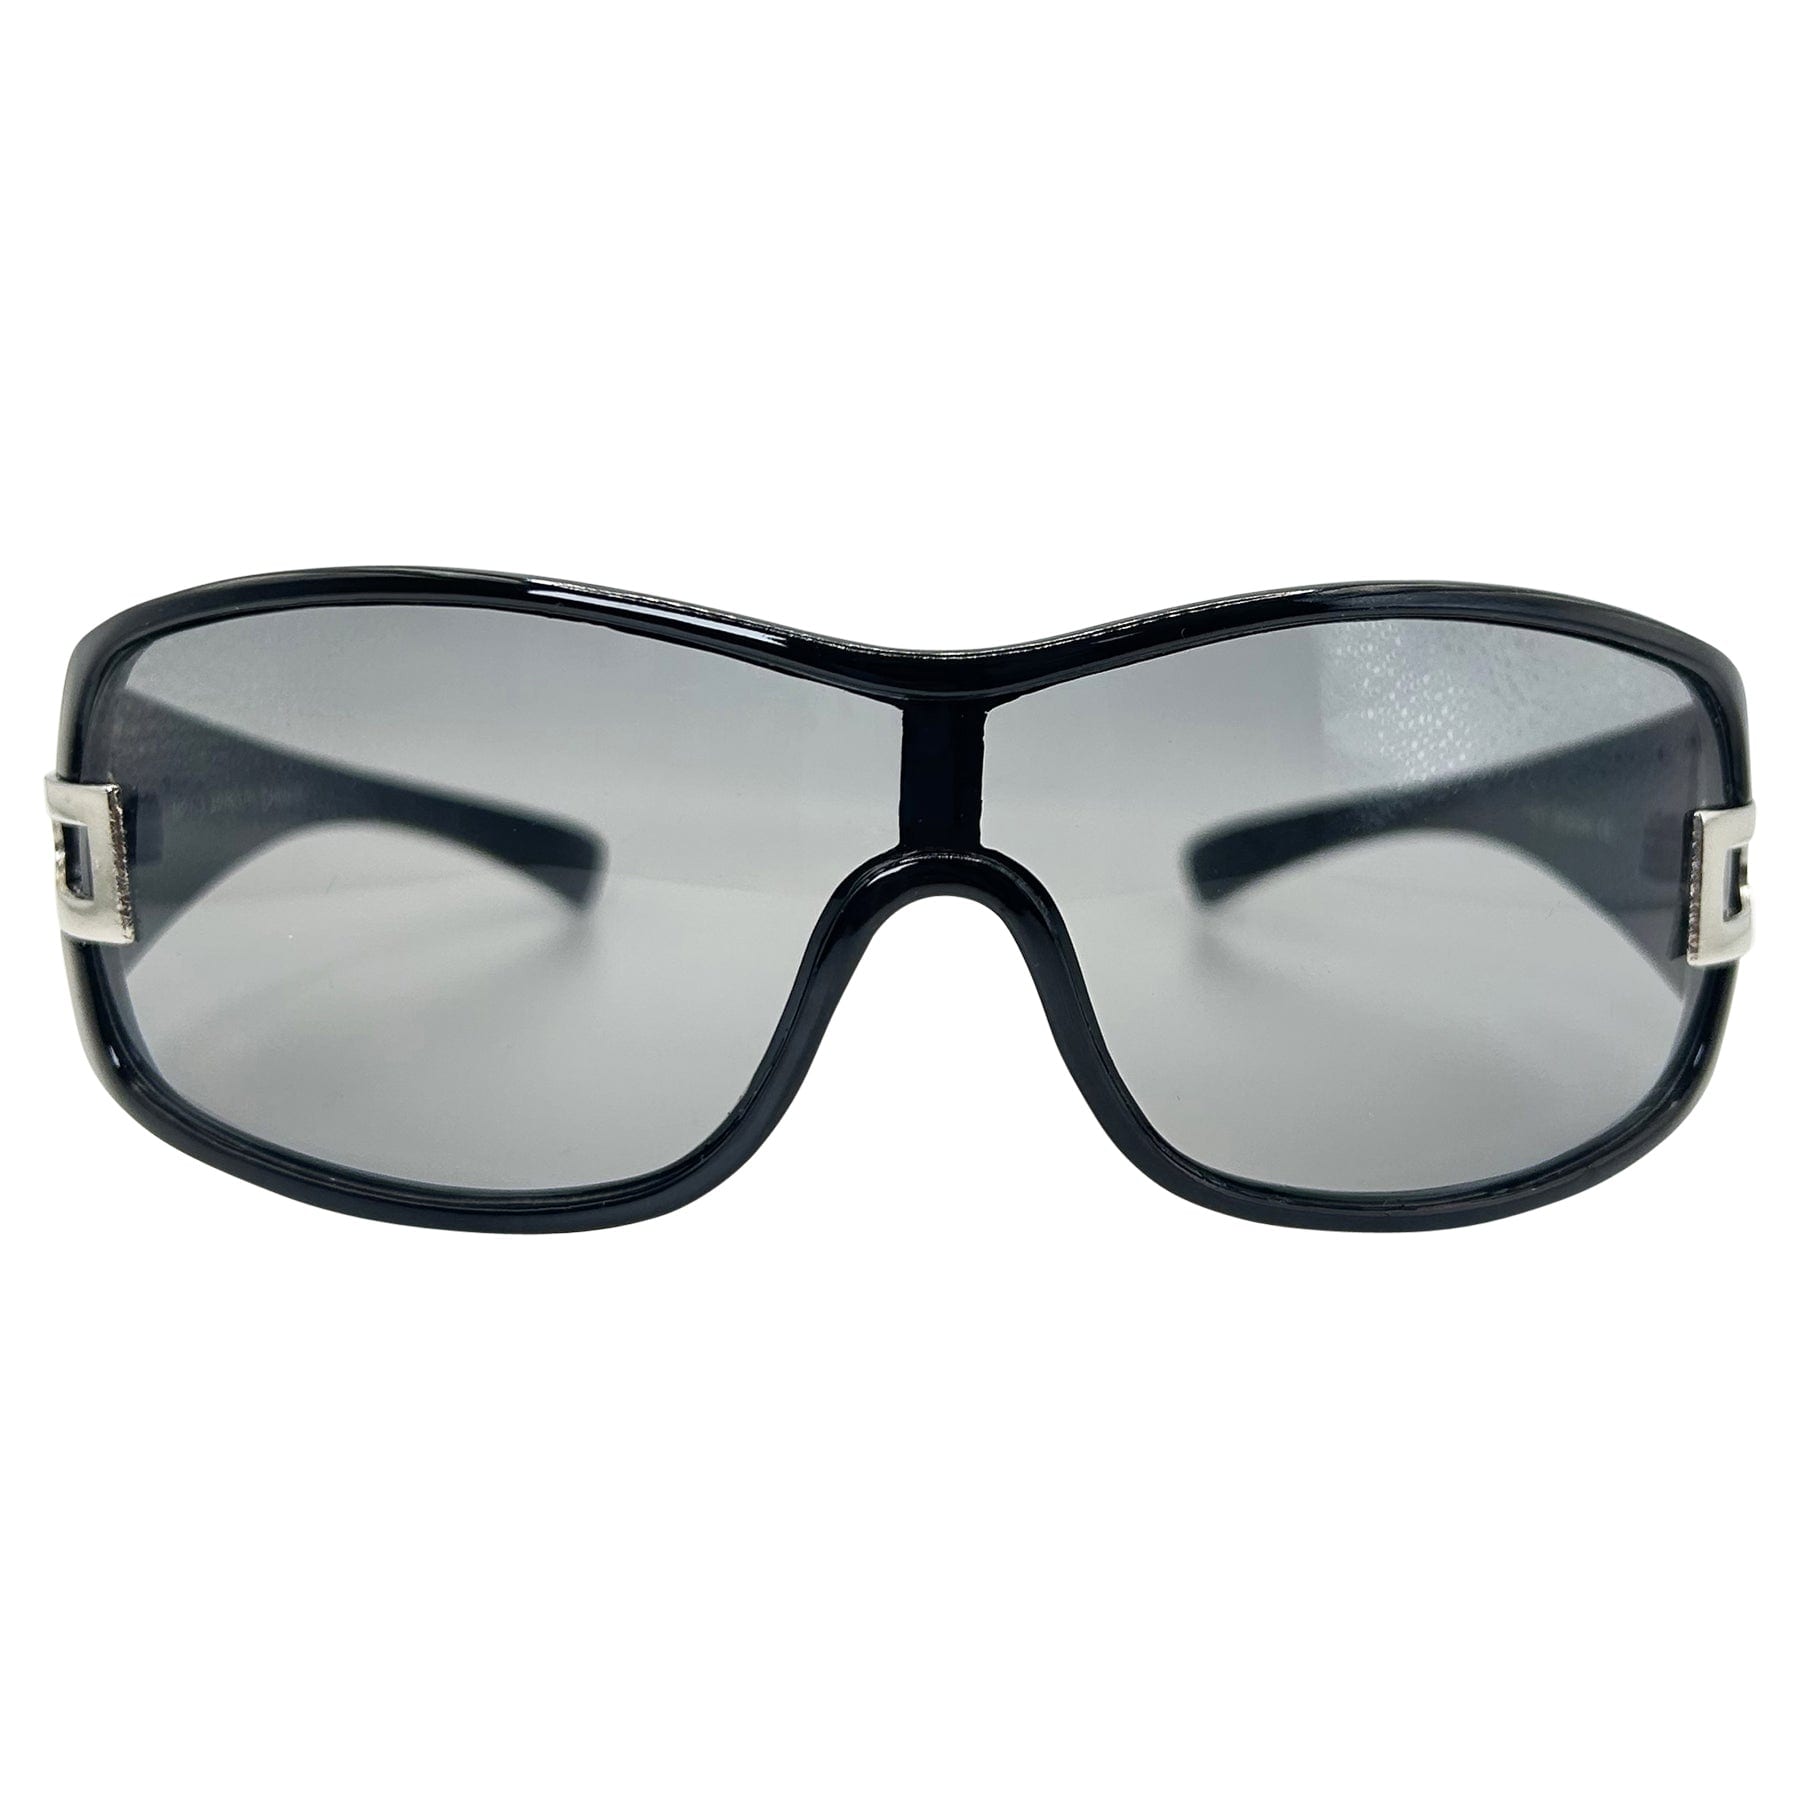 y2k shield sunglasses with a sporty wraparound frame